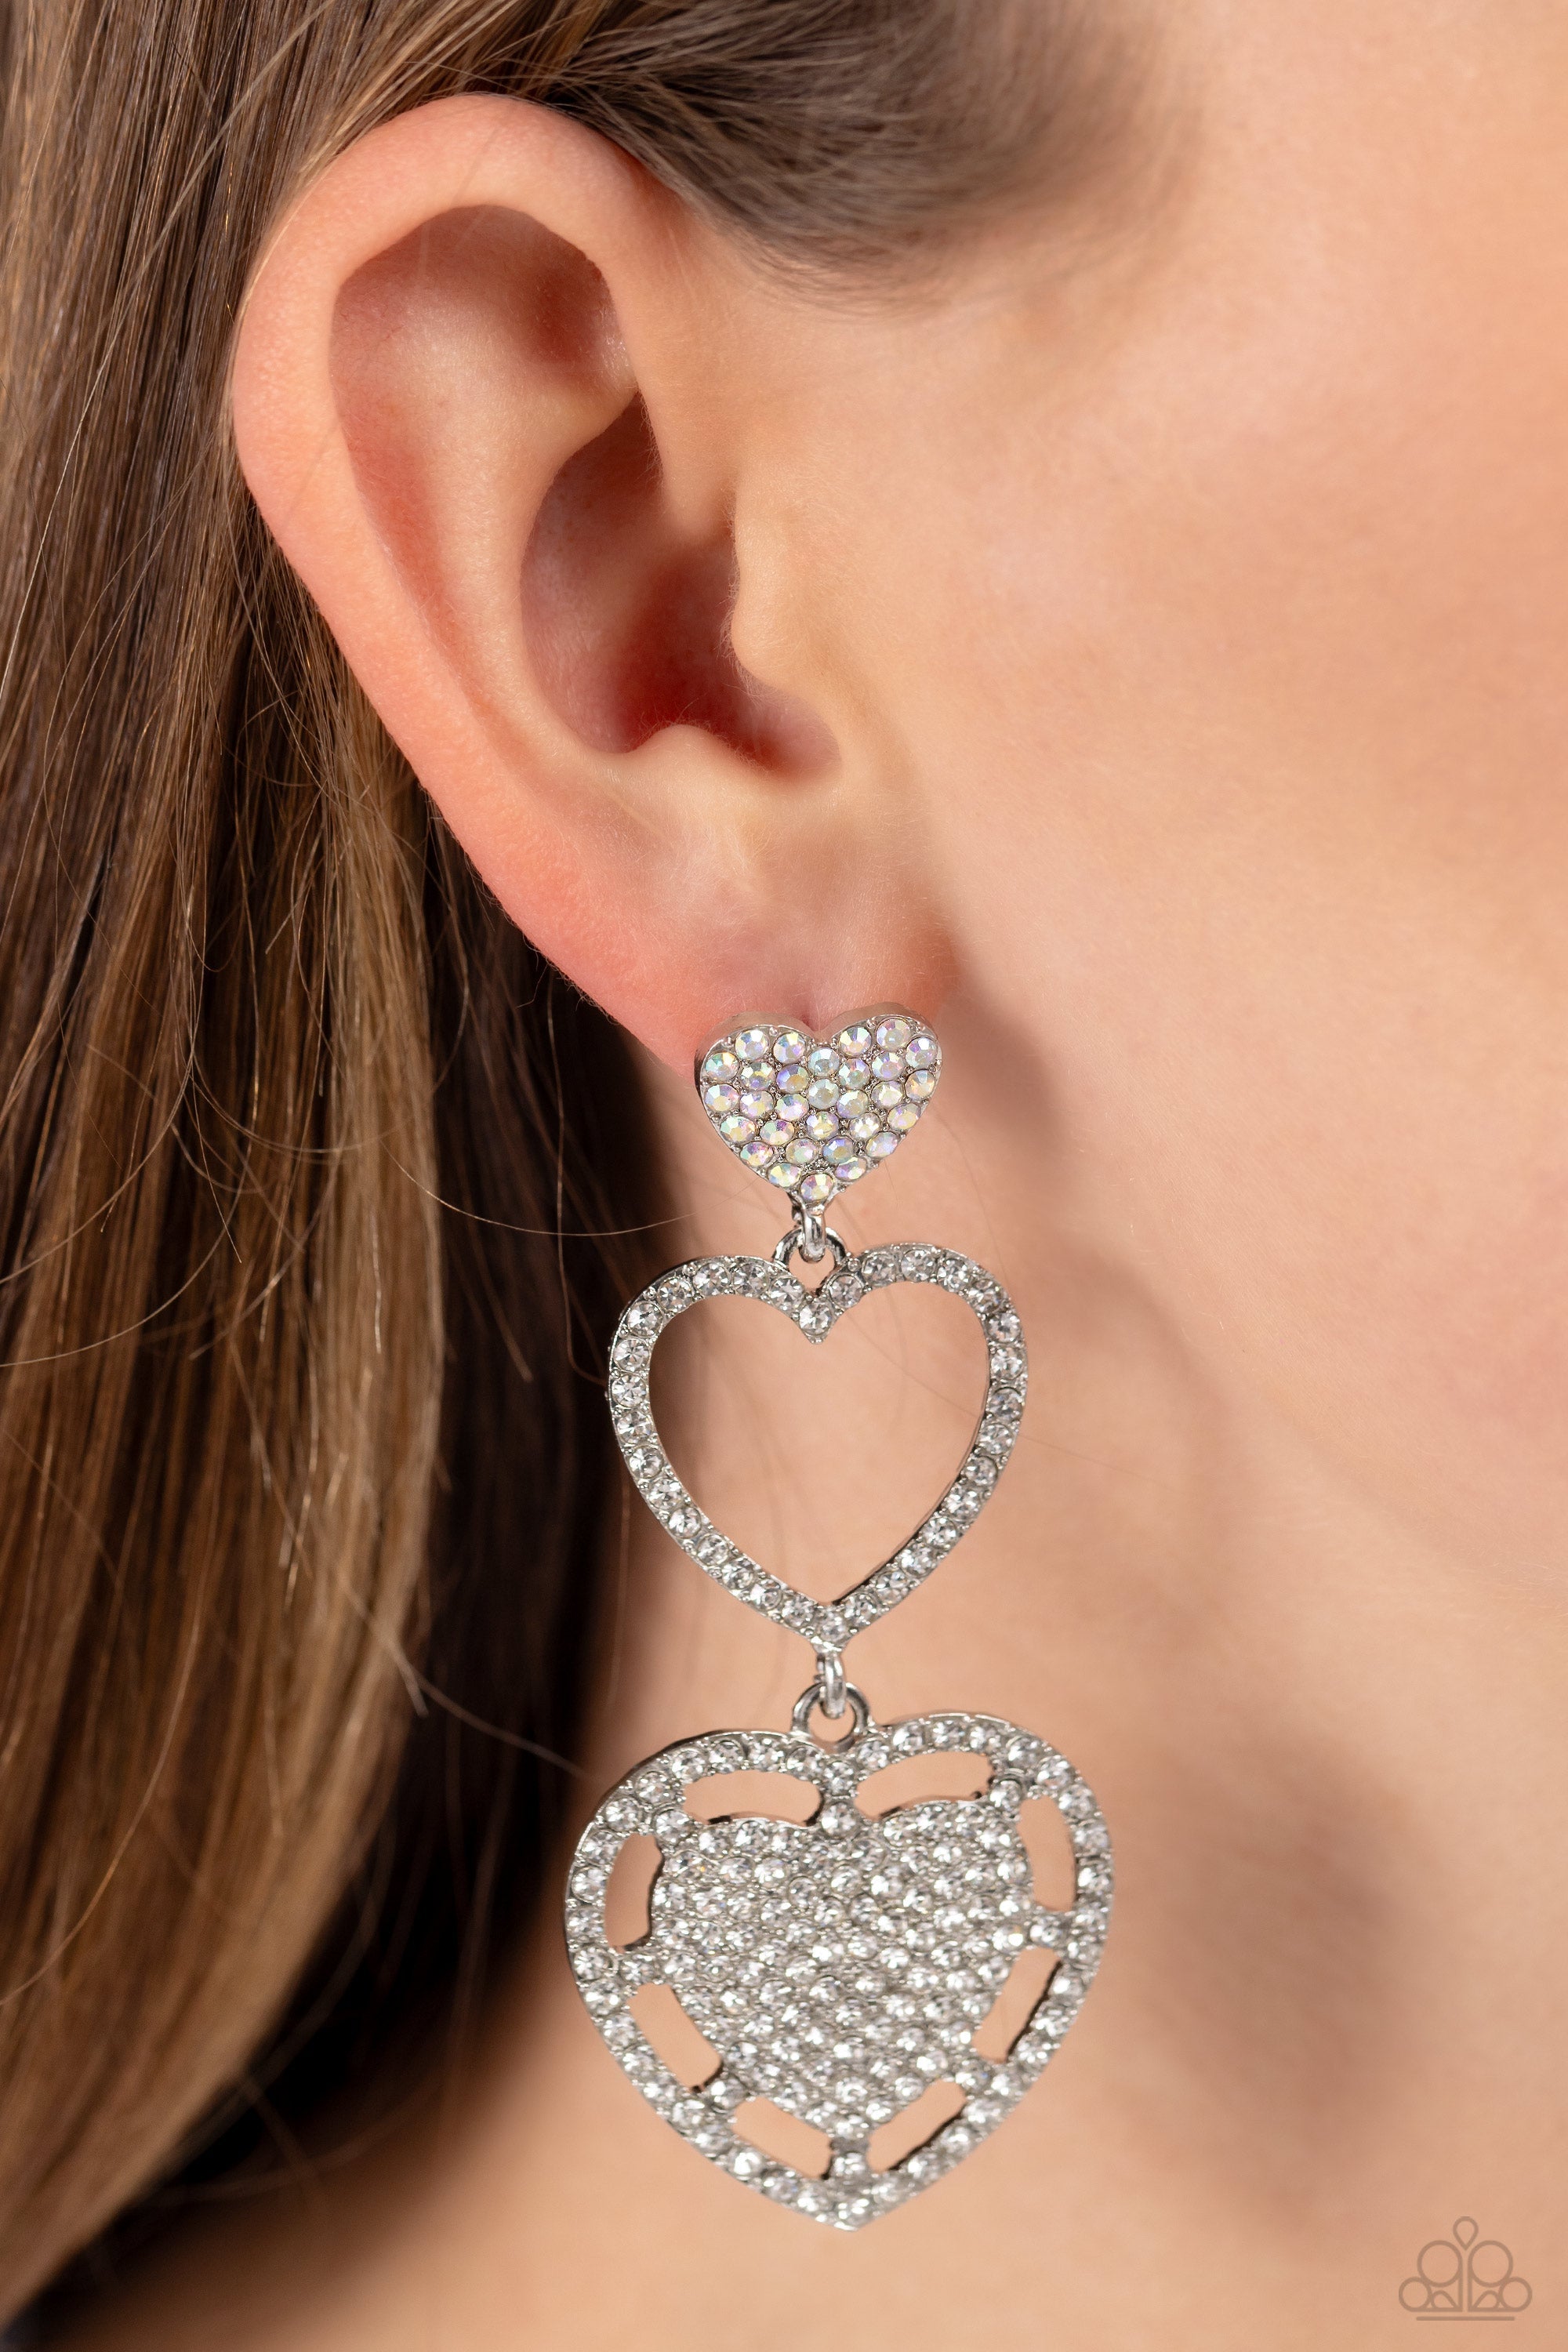 Couples Celebration White Rhinestone Heart Earrings - Paparazzi Accessories- lightbox - CarasShop.com - $5 Jewelry by Cara Jewels